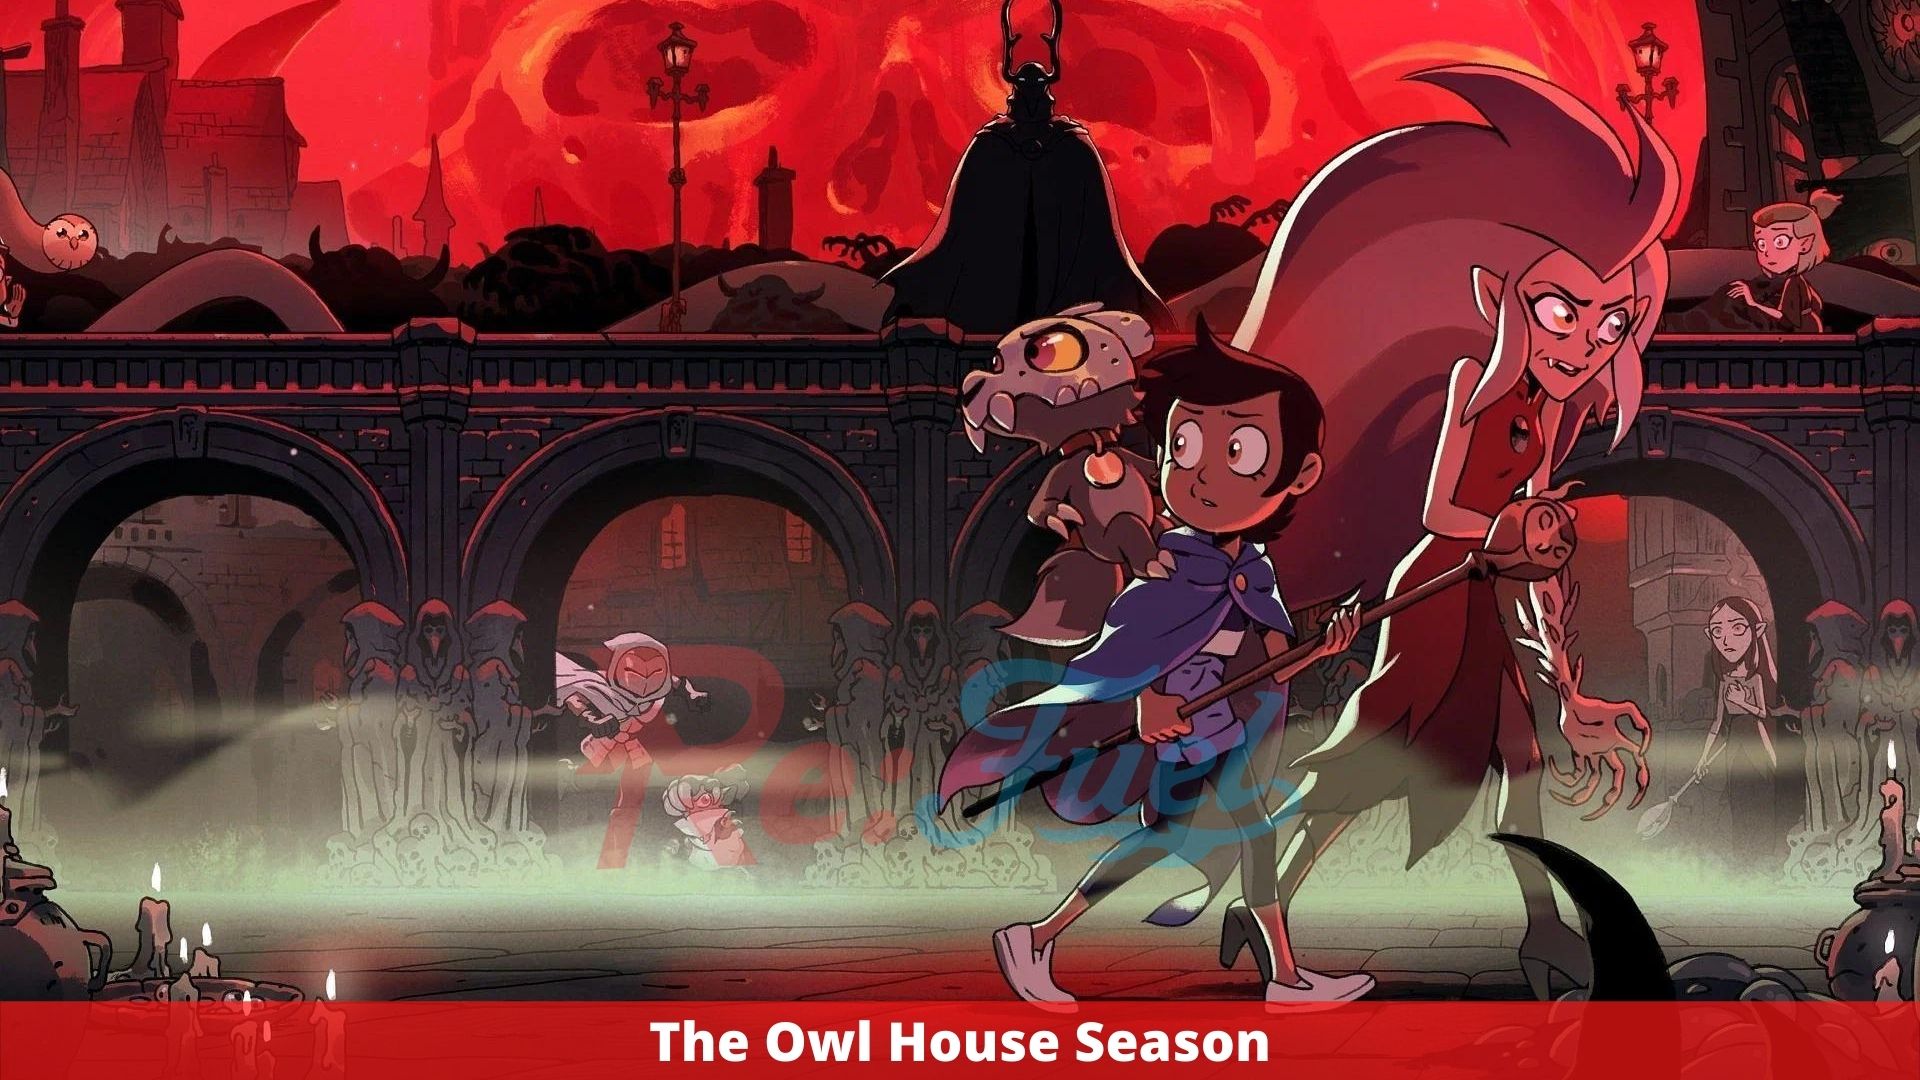 The Owl House Season 2 Episode 19 - Complete Info!